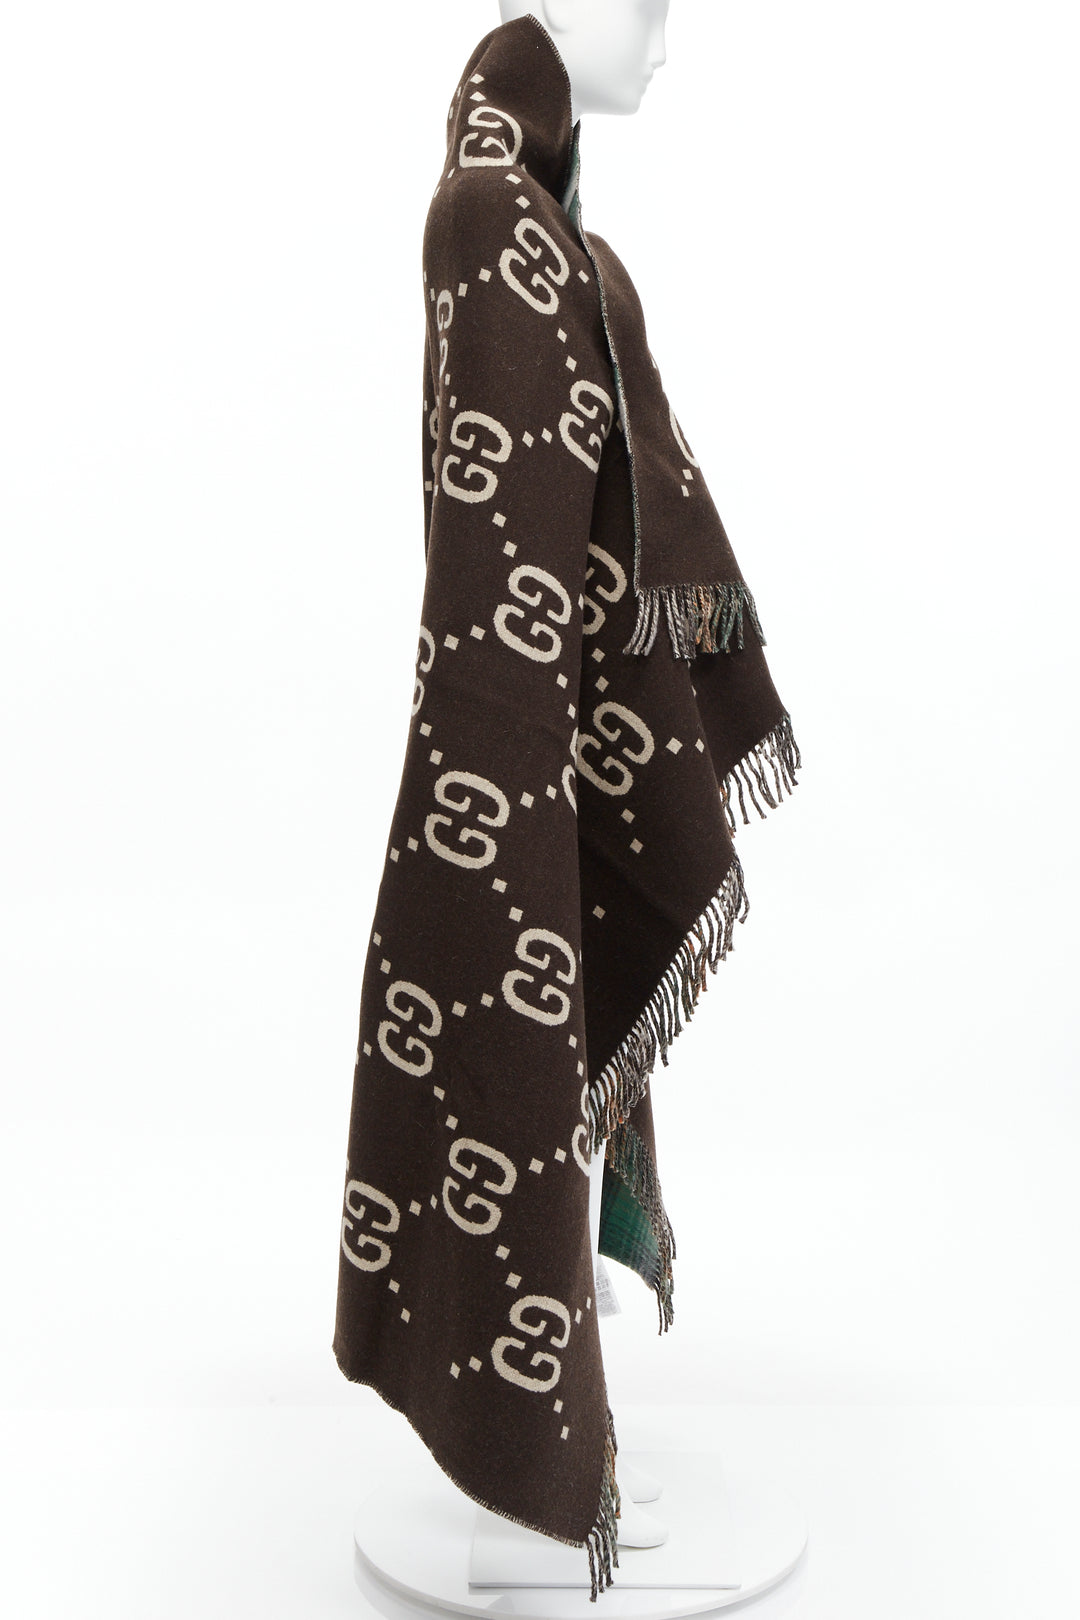 GUCCI 100% wool green red plaid tartan brown GG monogram blanket scarf